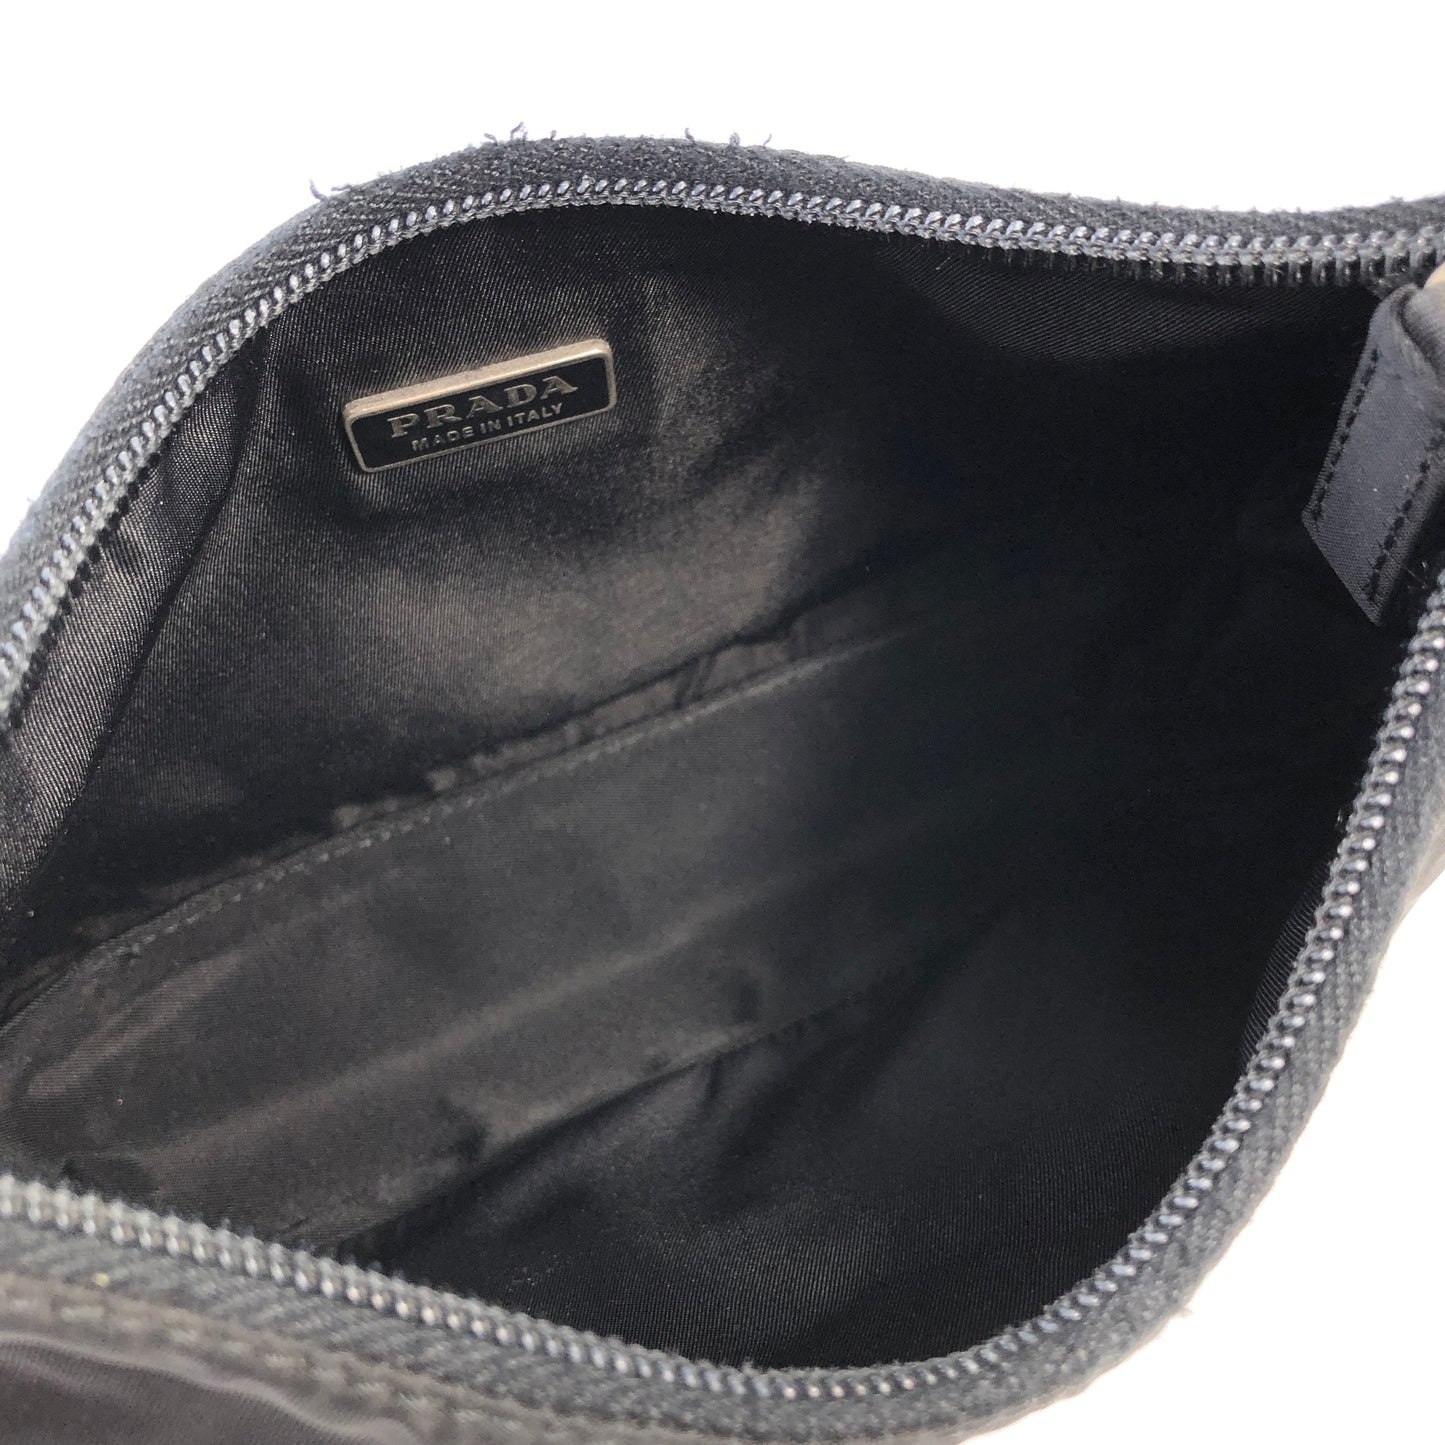 PRADA Triangle logo Nylon Handbag Hobo bag Black Vintage ajhrhr